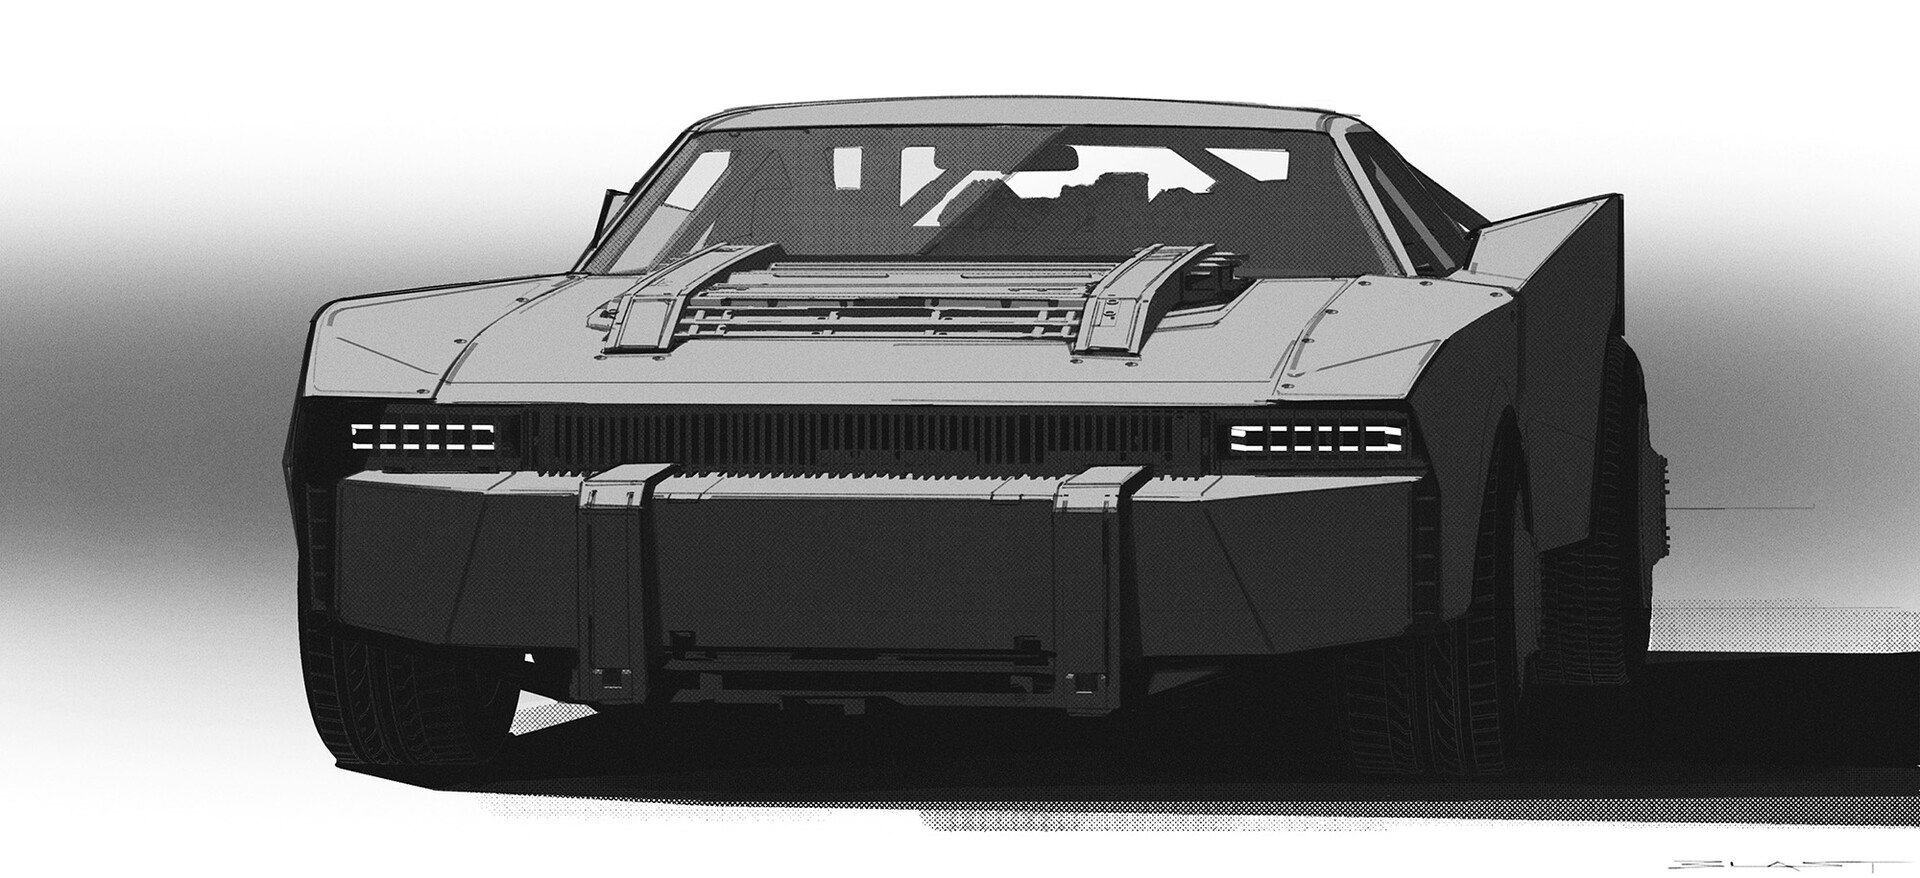 Batman 2022: Batmobile Designer Shared Details on the Vehicle